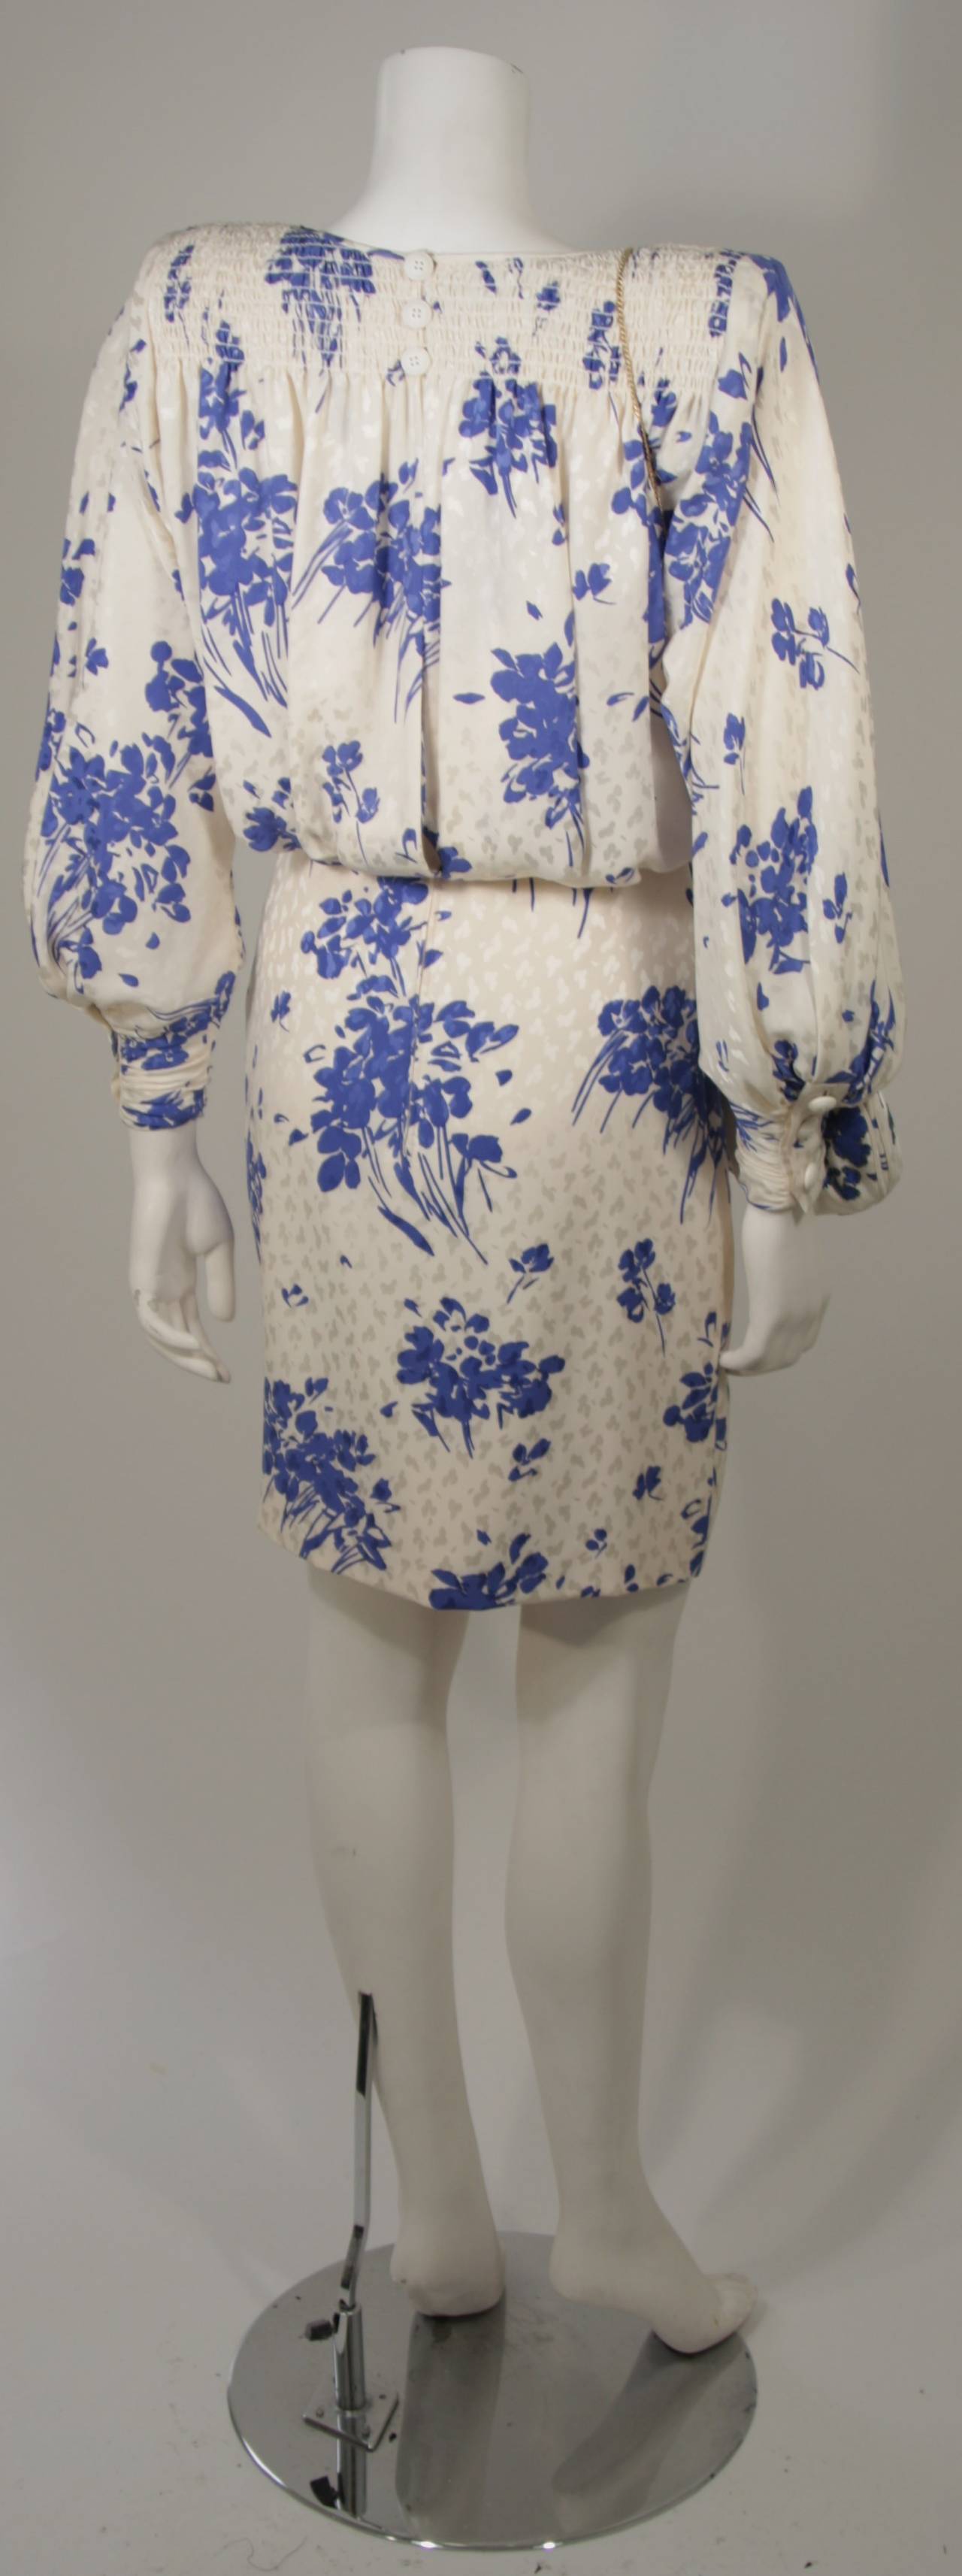 Galanos Silk Dress with Matching Embellished Judith Leiber Purse Size 2-4 3